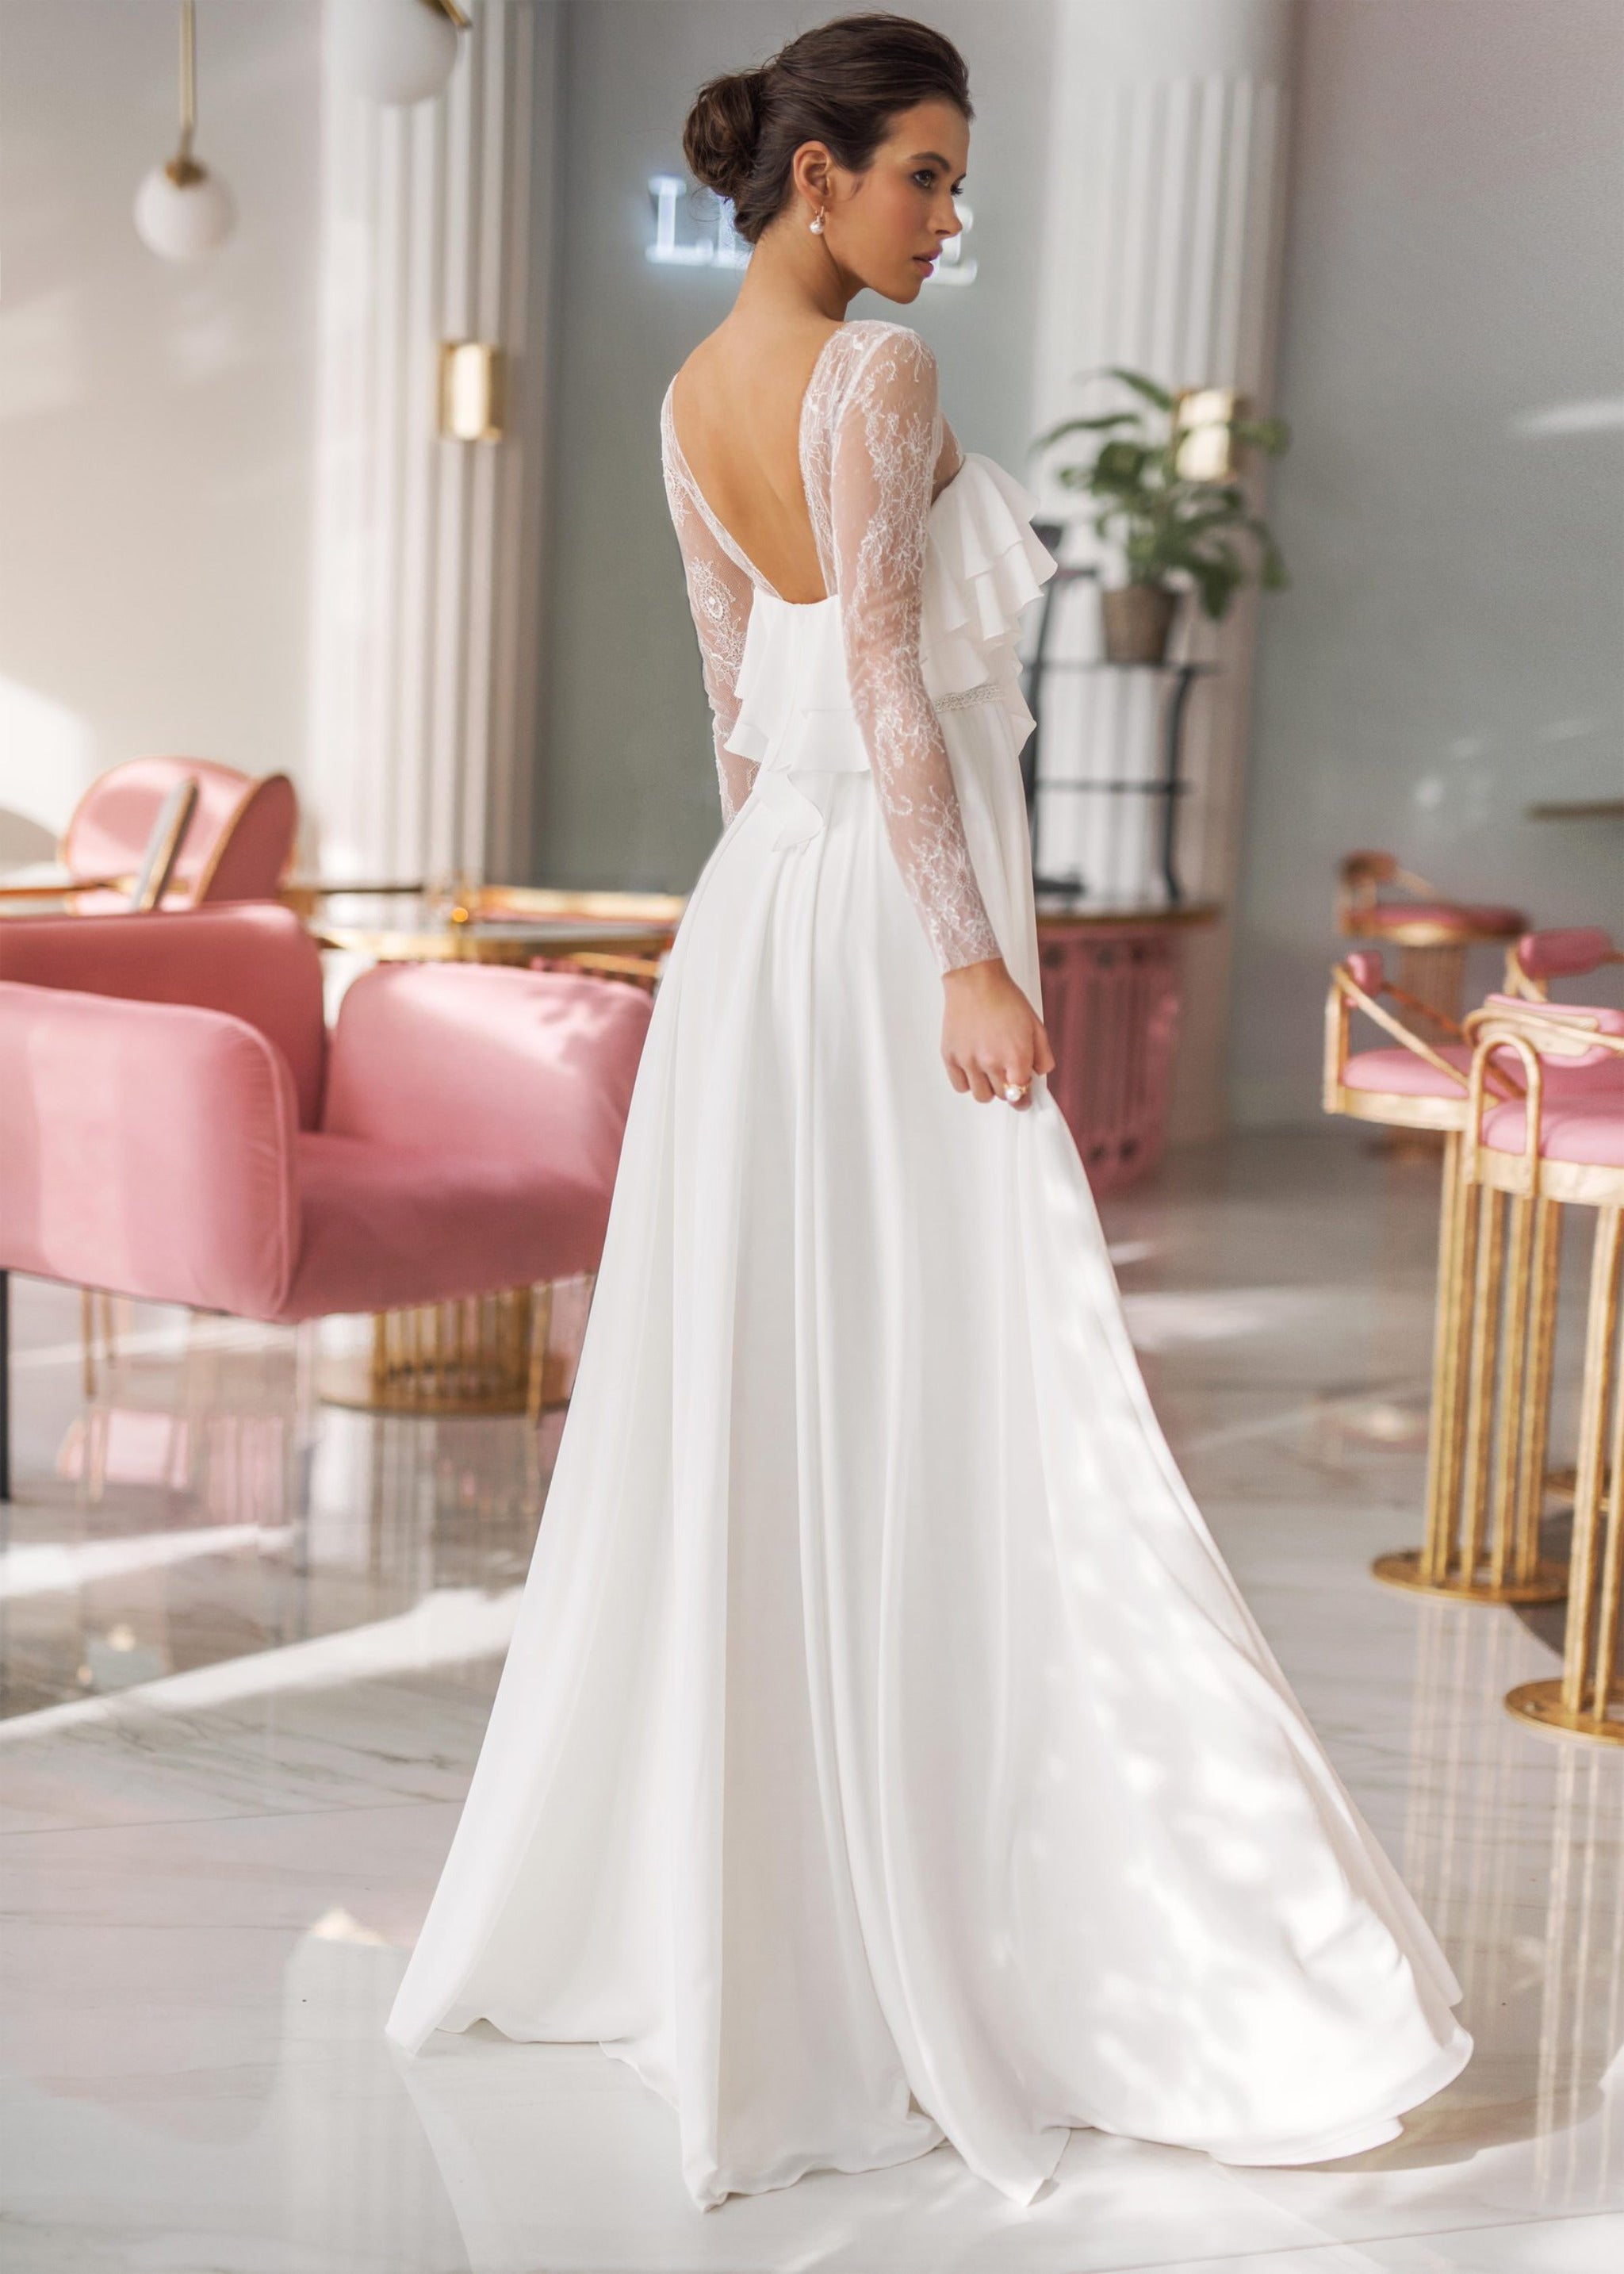 Chiffon wedding dress. Long sleeve bridal gown. Light wedding dress online.